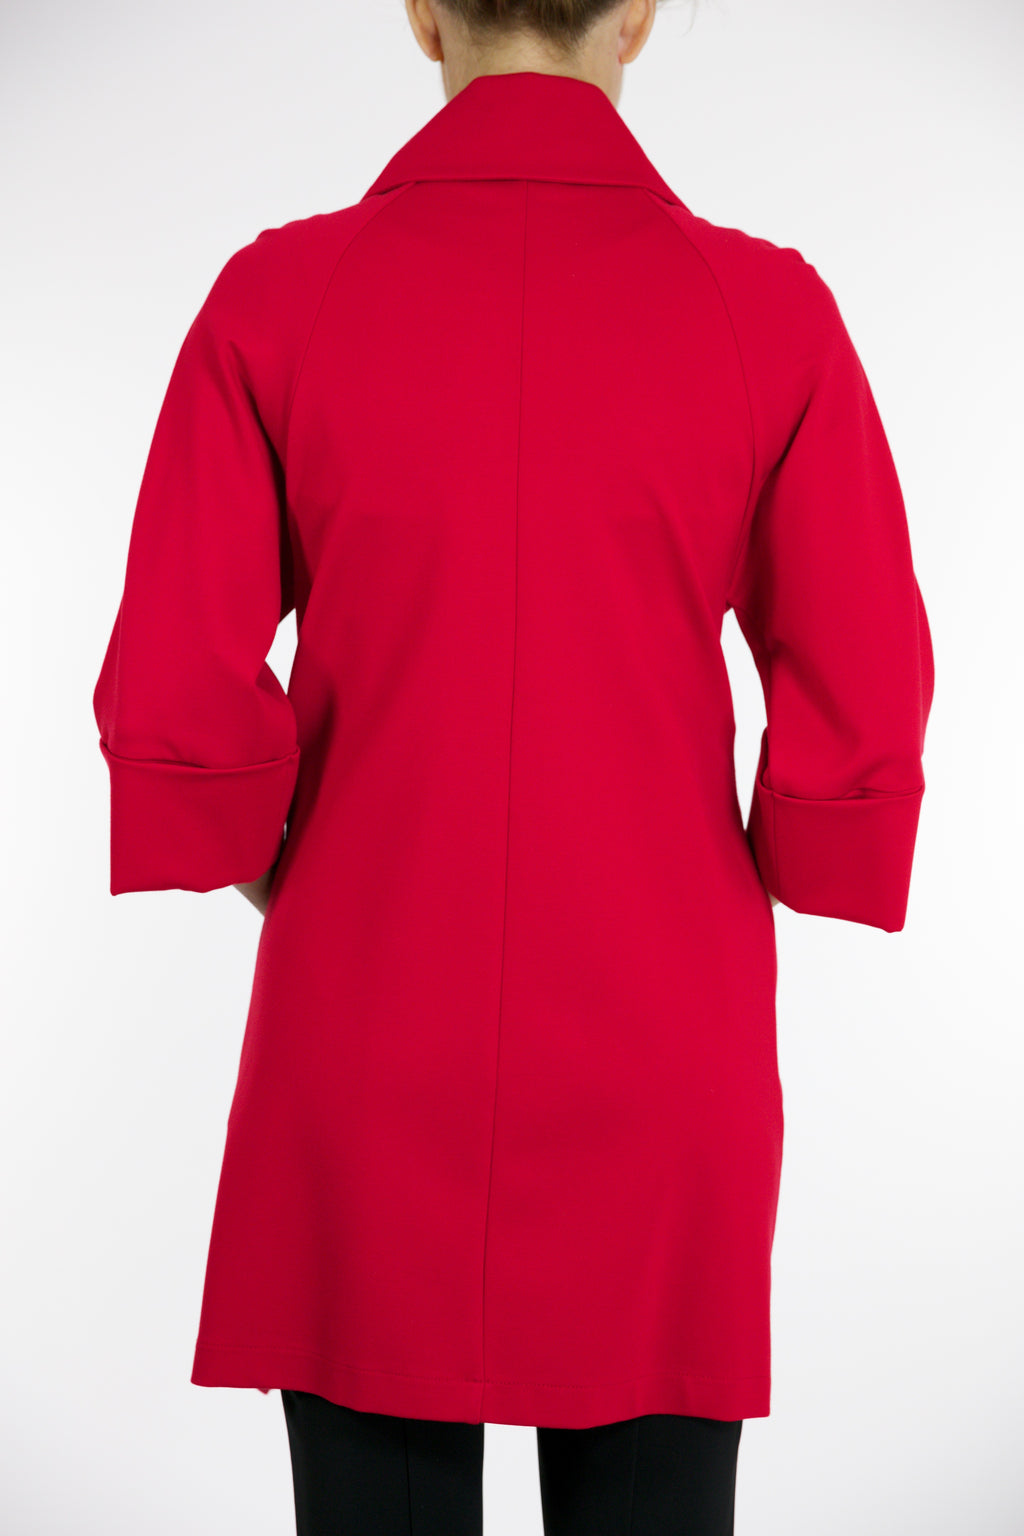 Joseph Ribkoff Red Jacket Style 153302